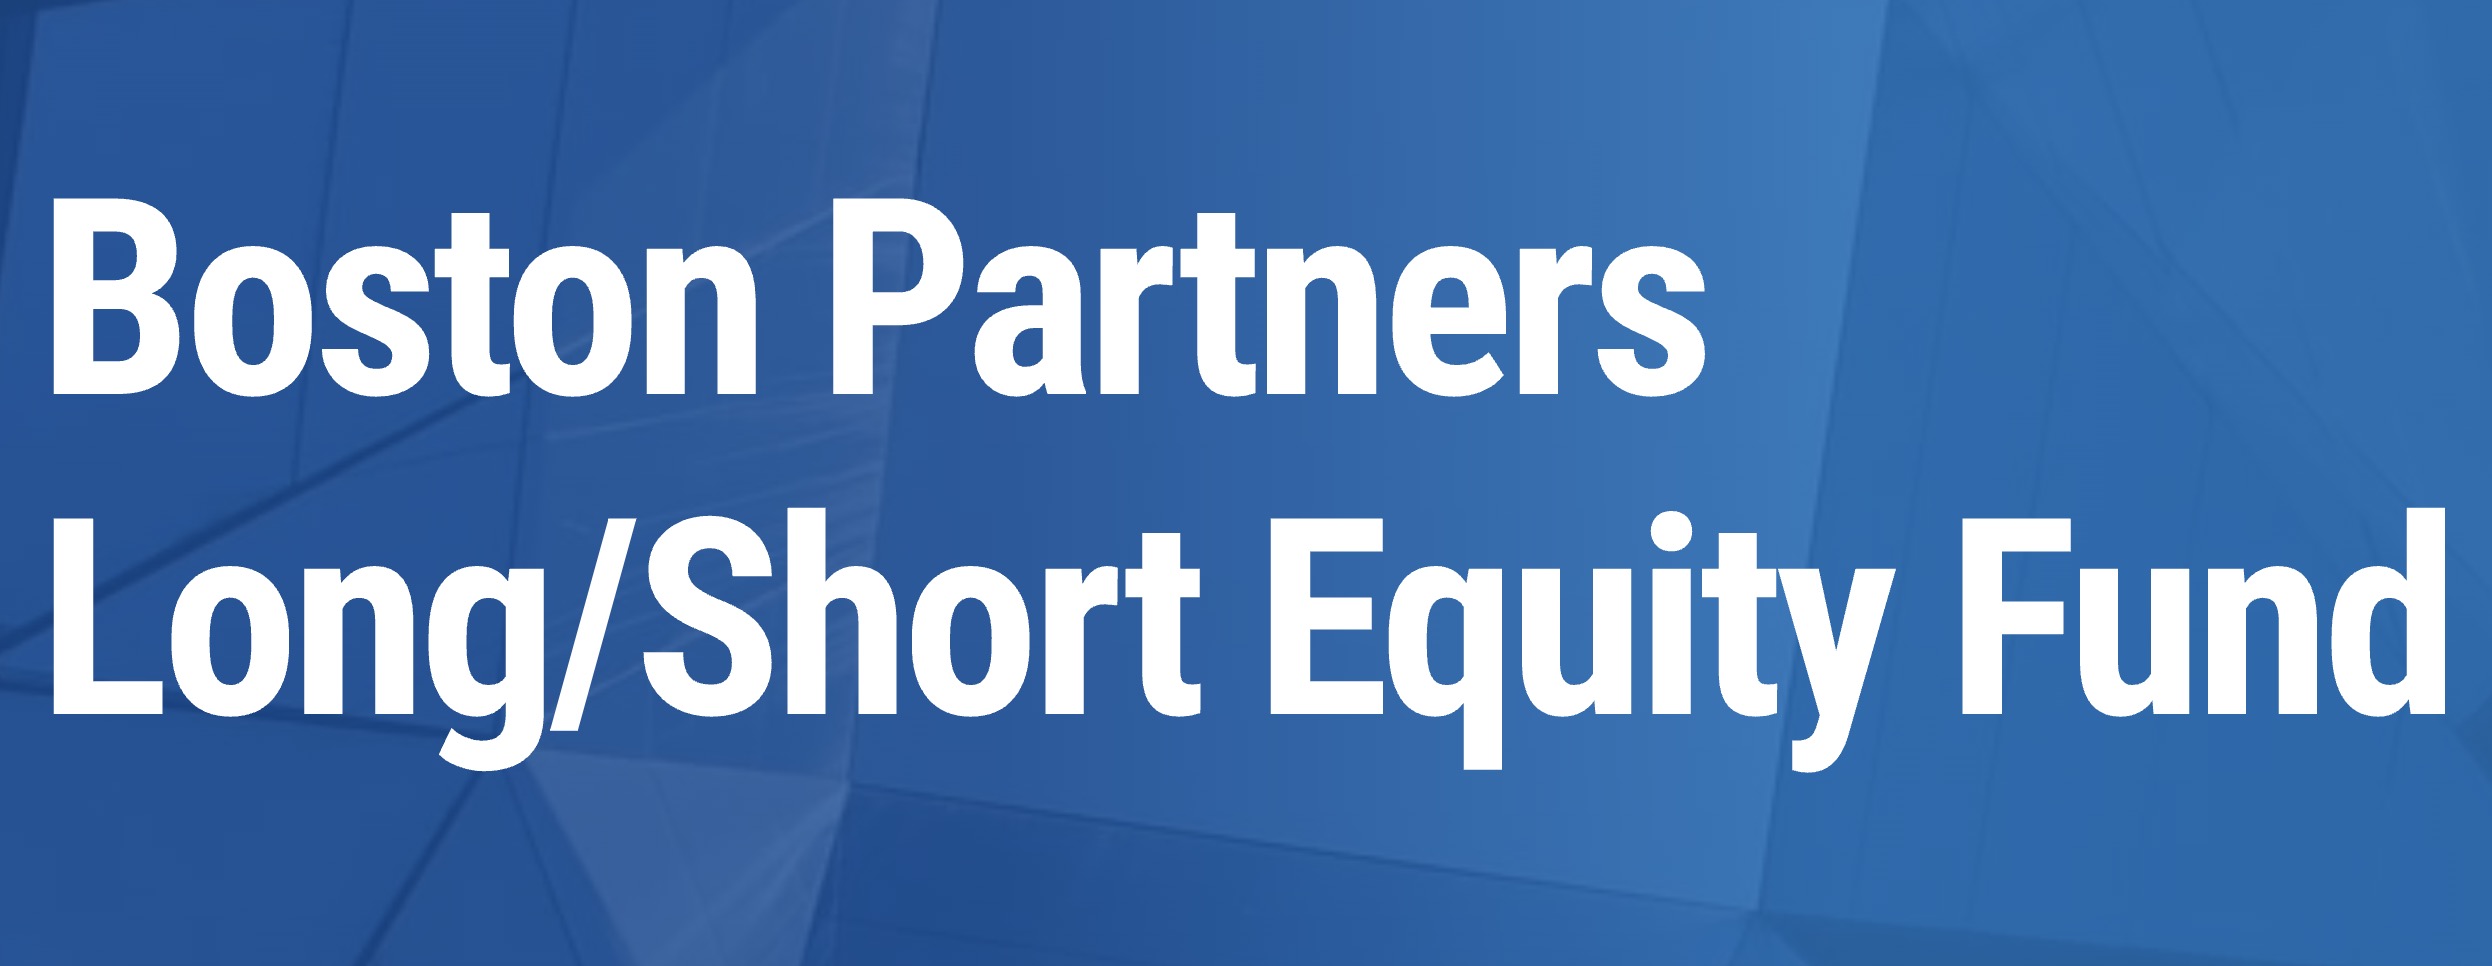 Boston Partners Long/Short Equity Fund Logo 